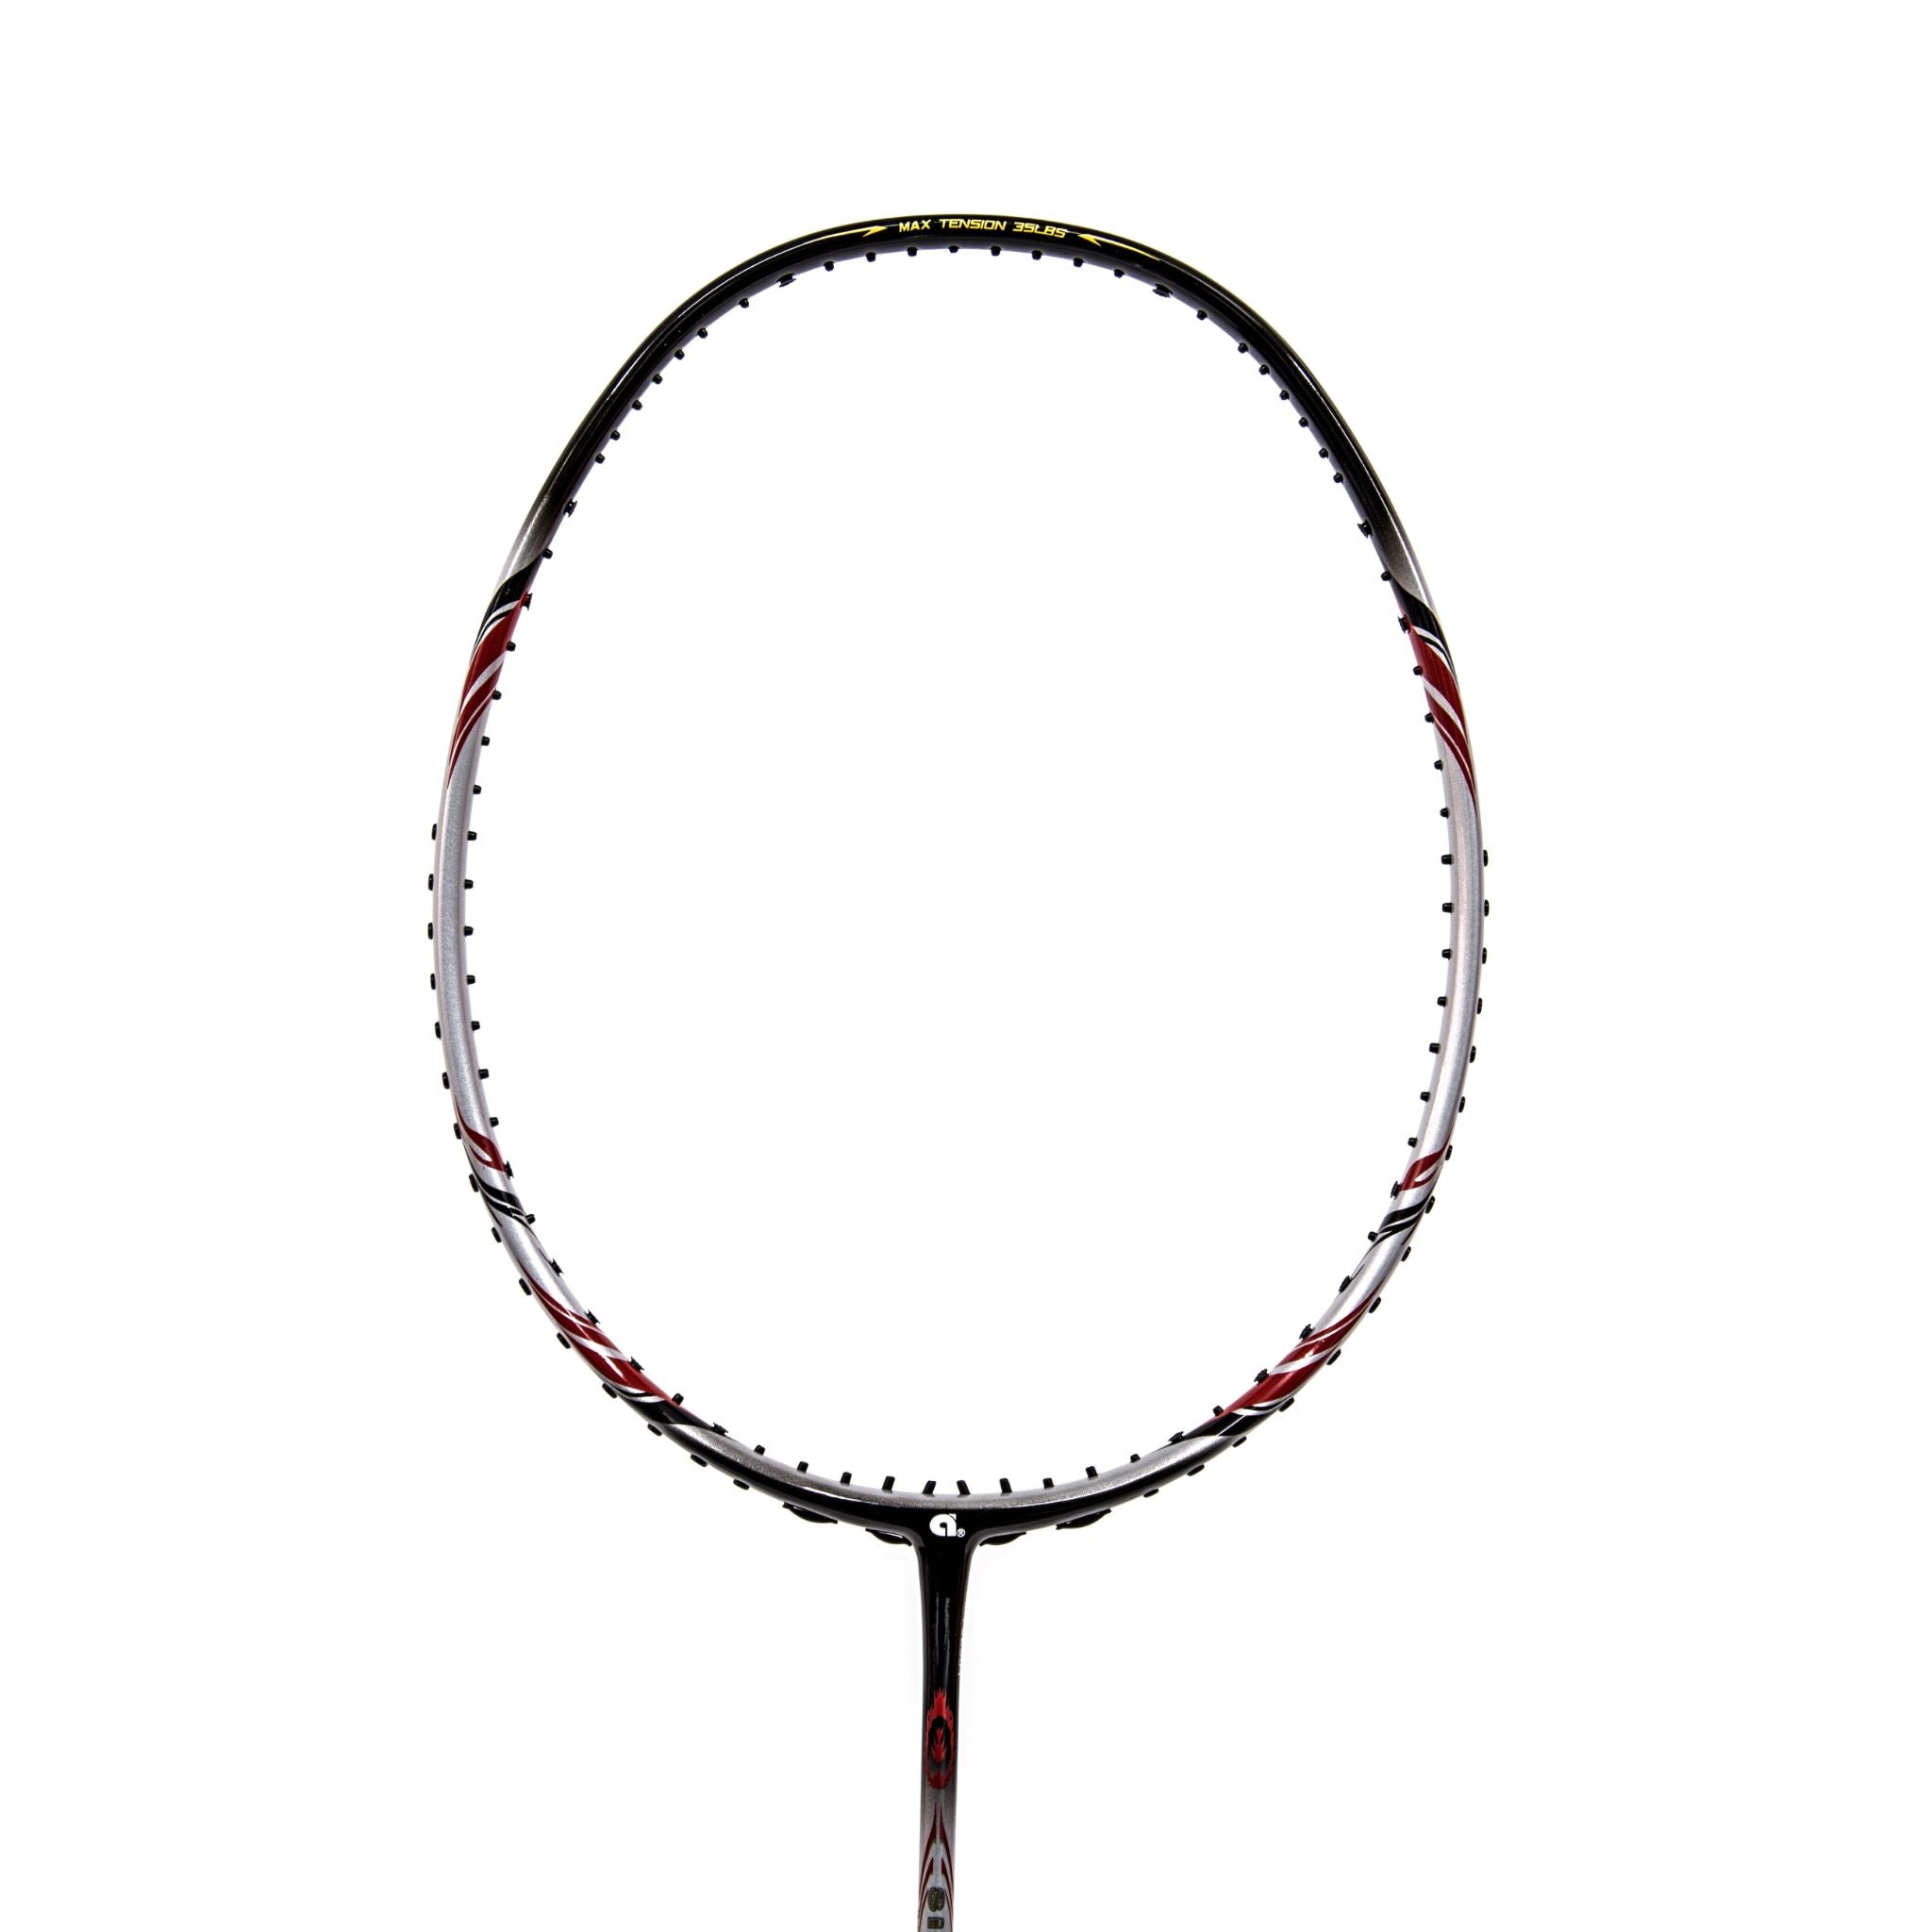 APACS Sizzle 100 Badminton Racket